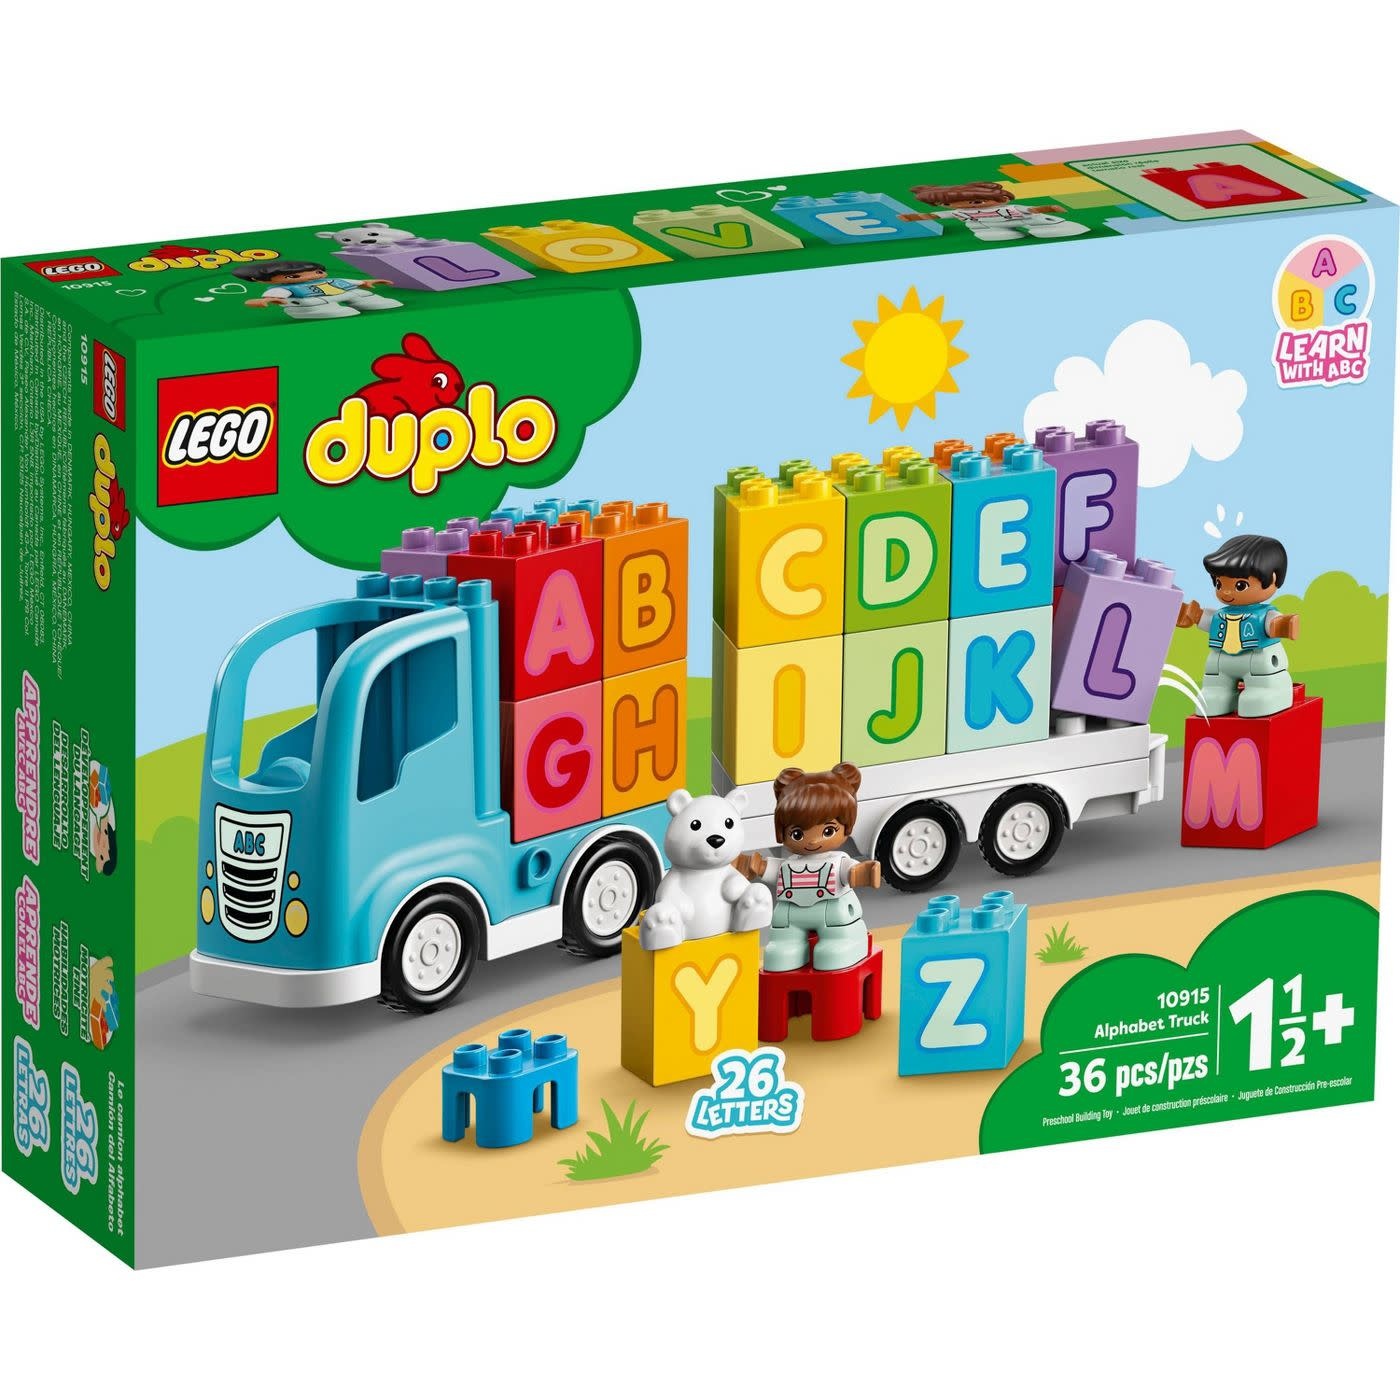 10915 Alphabet Truck by LEGO  Duplo - FUNdamentally Toys